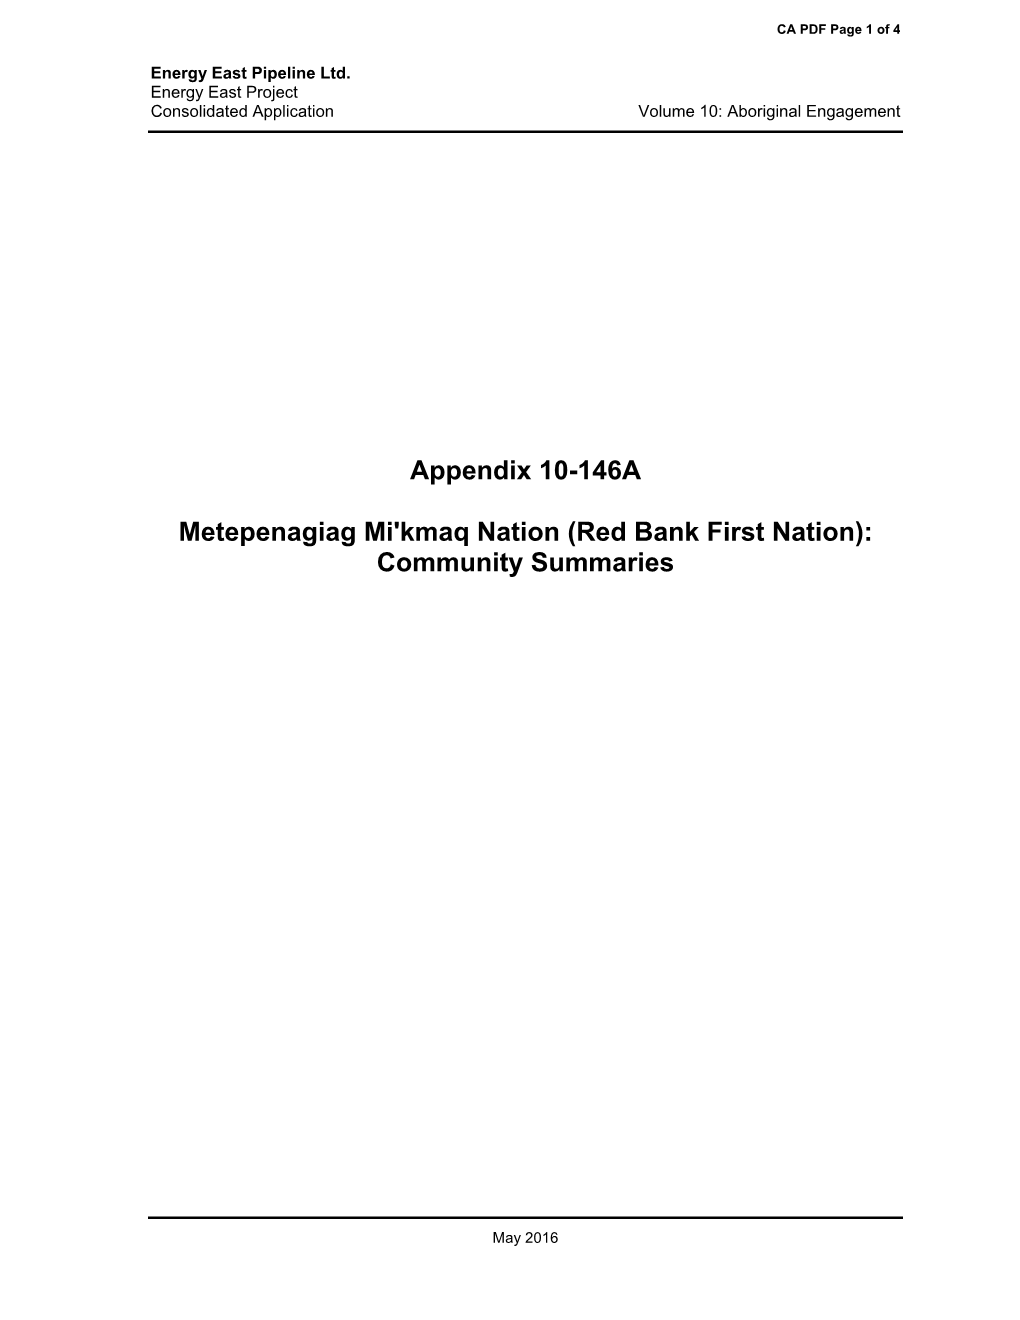 Appendix 10-146A Metepenagiag Mi'kmaq Nation (Red Bank First